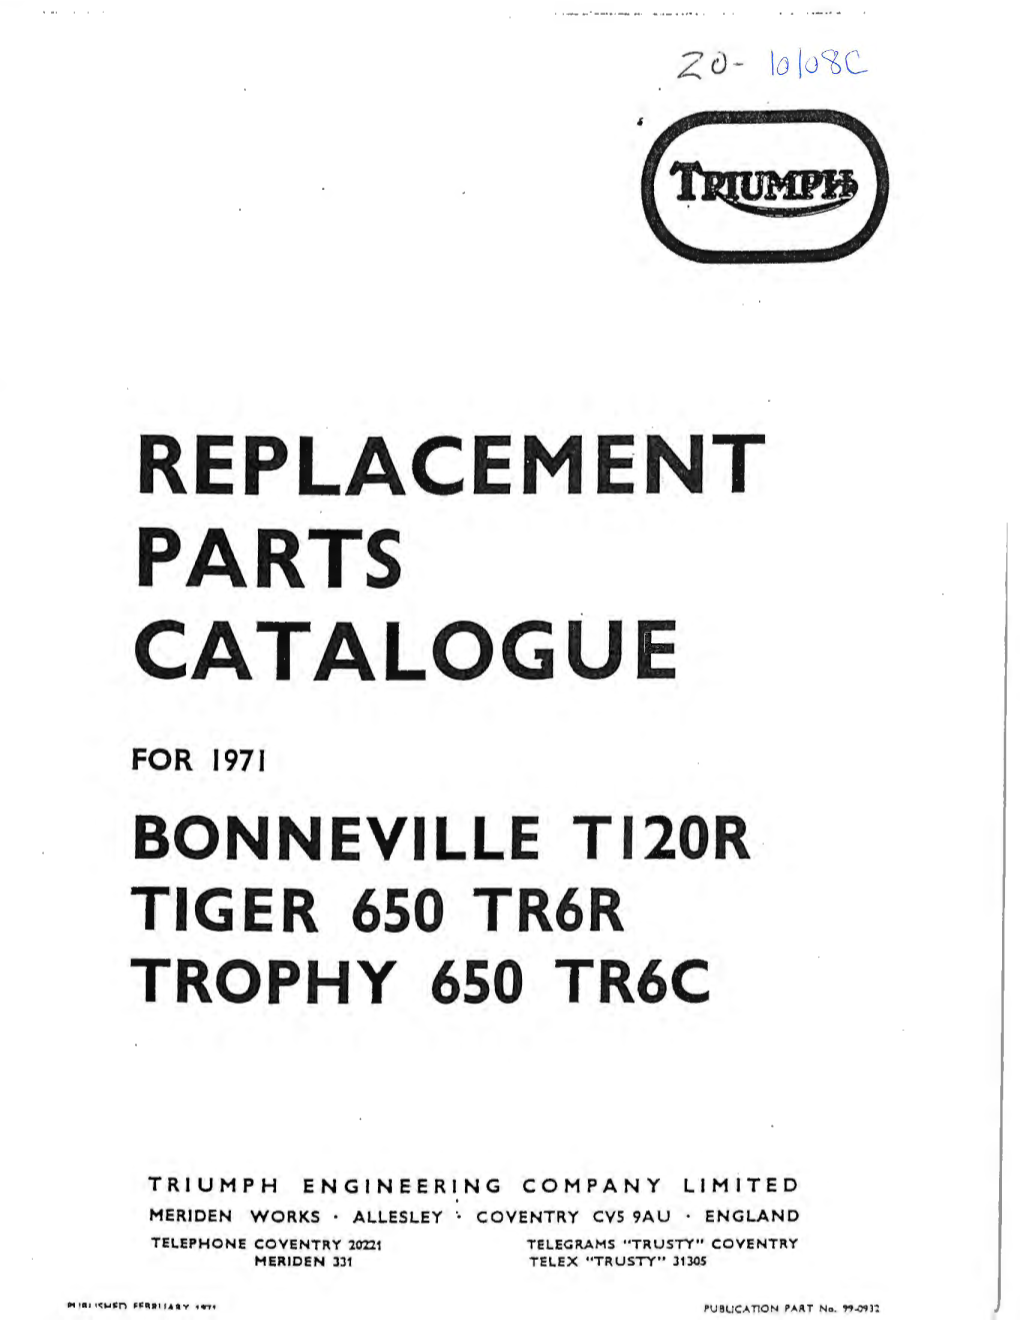 Replacement Parts Catalogue